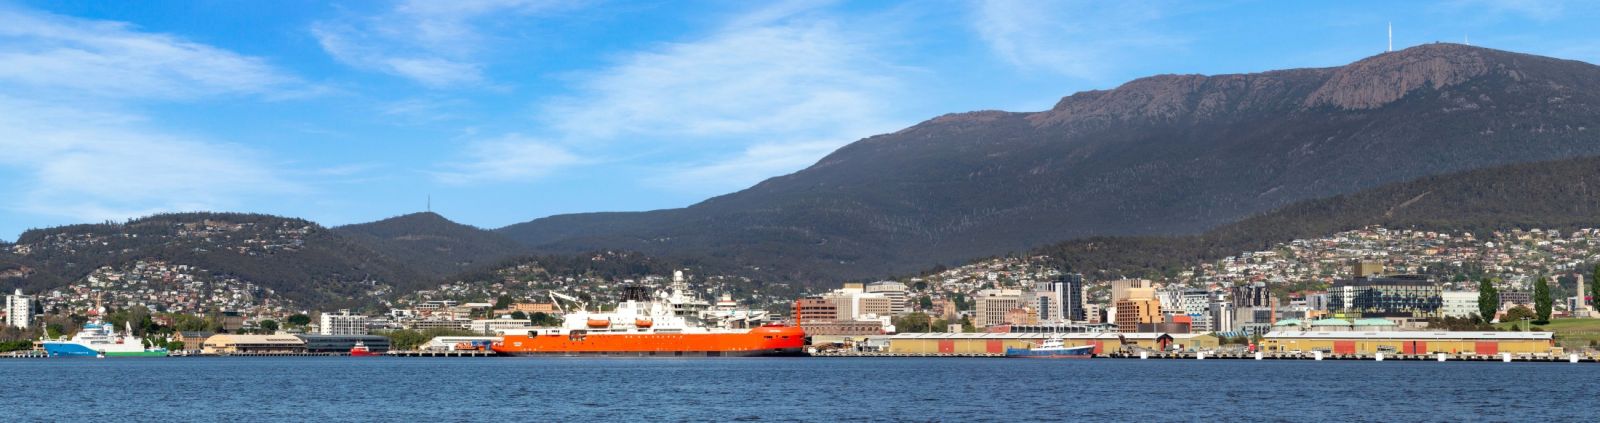 Australian icebreaker Nuyina docked at Hobart on a clear, blue sky day